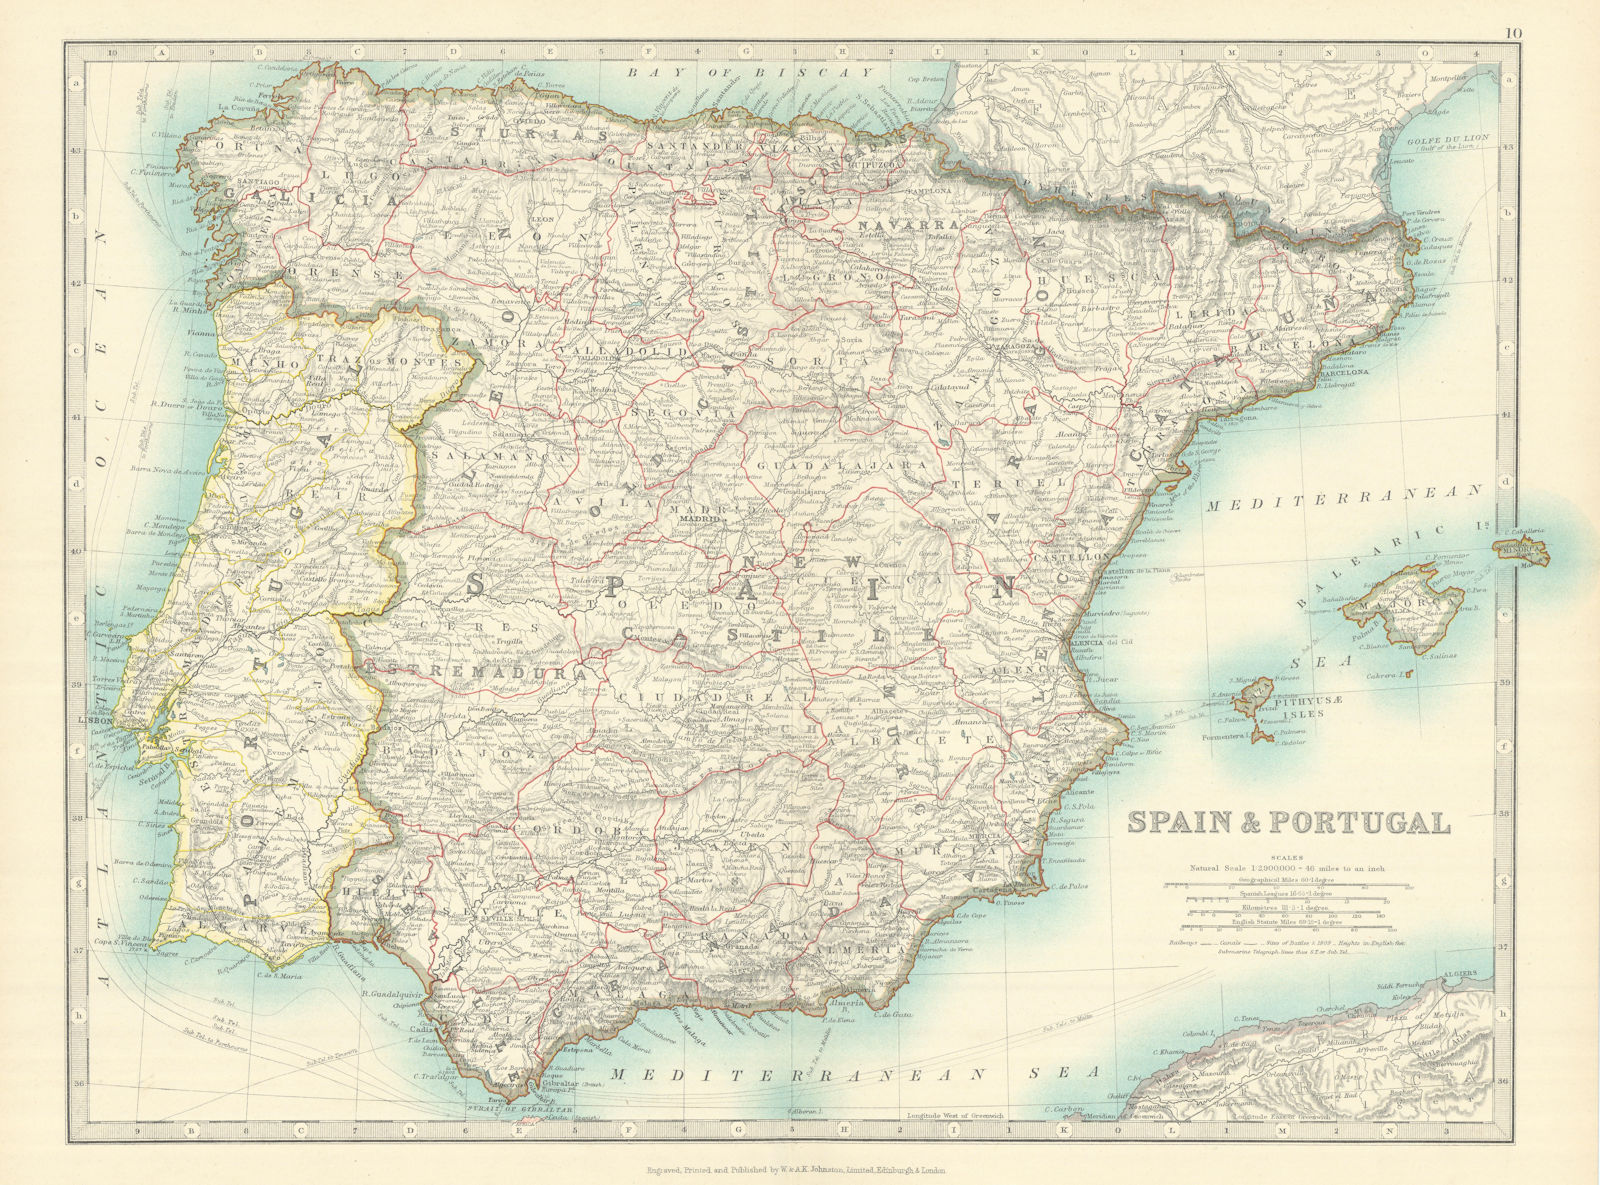 SPAIN & PORTUGAL showing Napoleonic battlefields & dates. JOHNSTON 1913 map